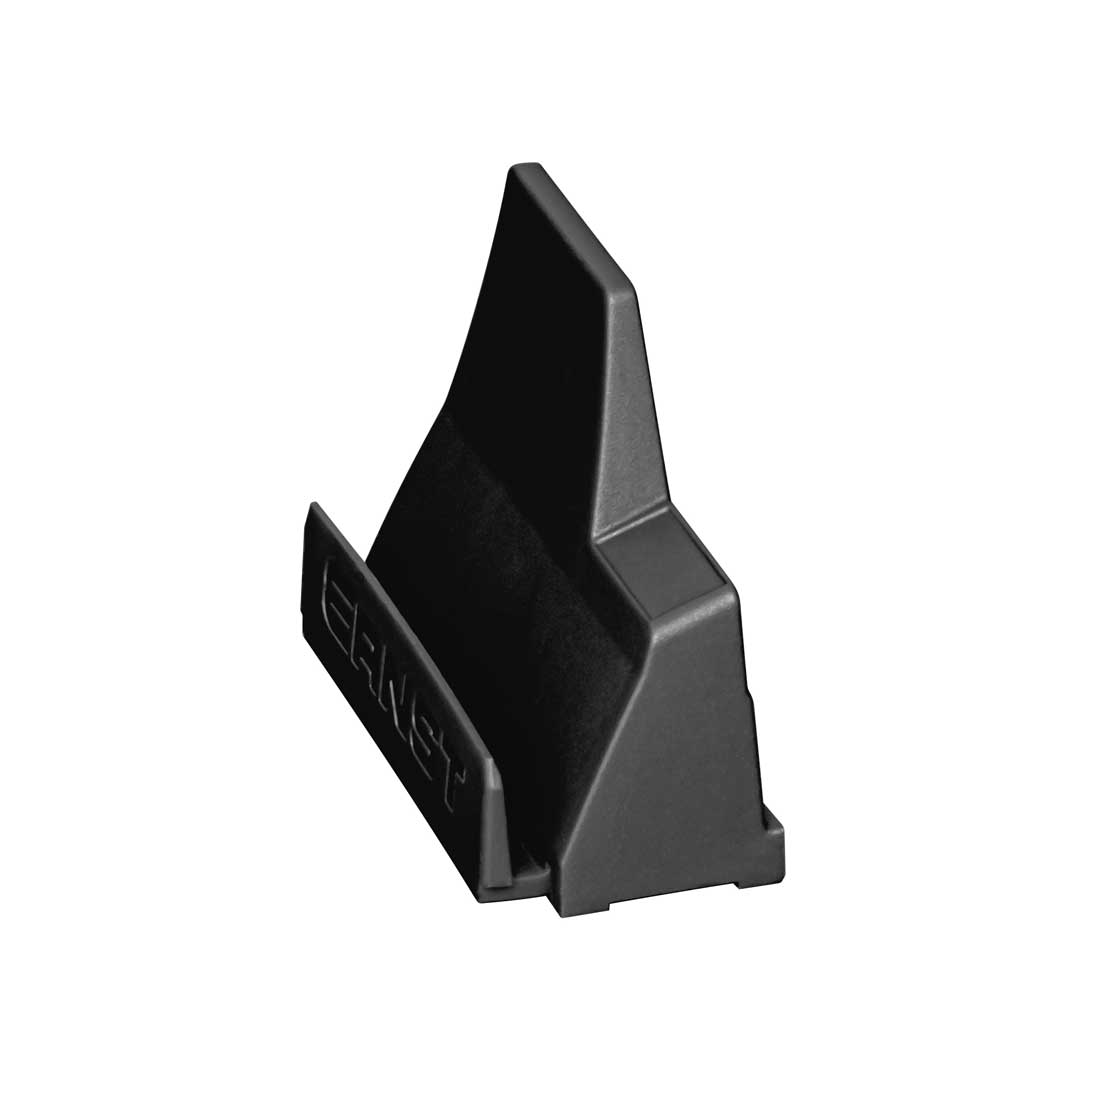 http://www.ernstmfg.com/Shared/Images/Product/Single-Tab-Magnetic-Modular-Wrench-Pro-Black/wrenchpro-singletab-black_1100.jpg